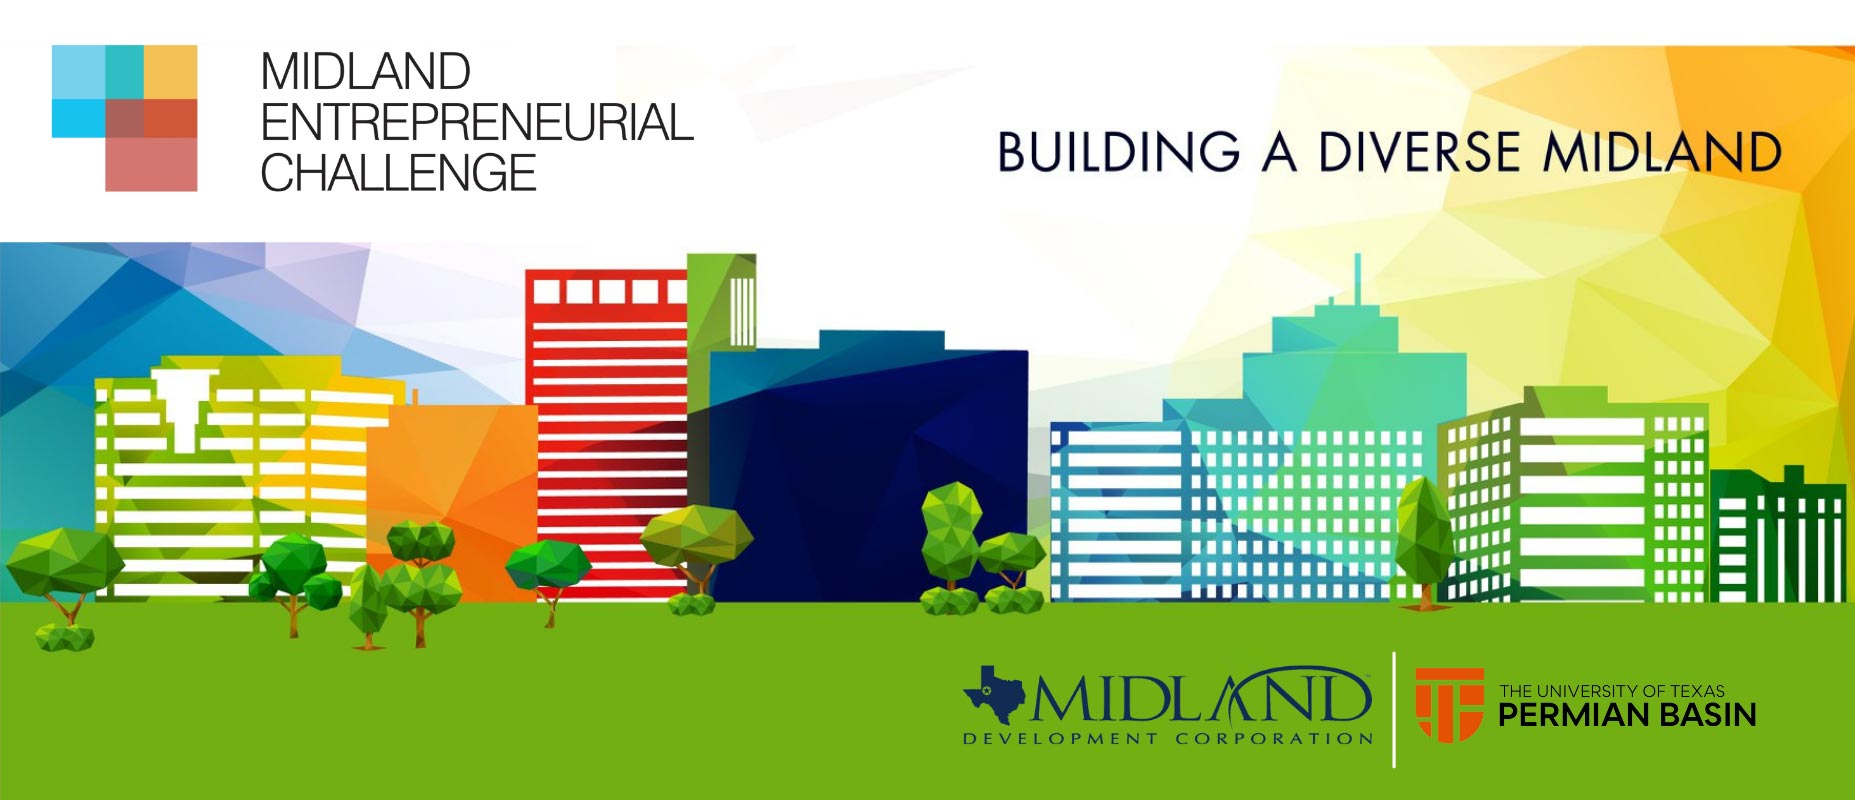 Midland Entrepreneurial Challenge Header